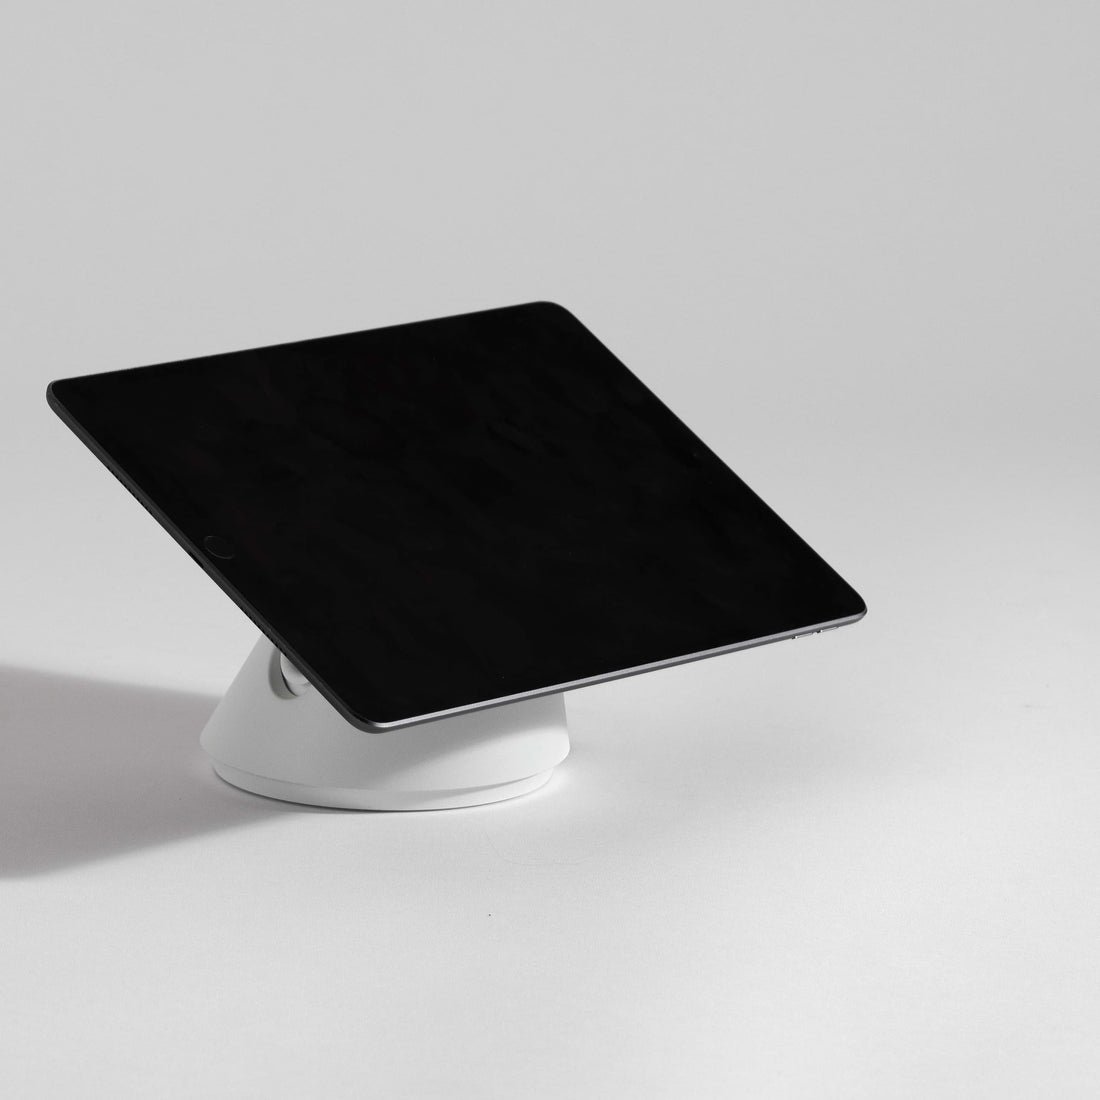 Maclocks iPad AV Conference Room Capsule – Space Kiosk